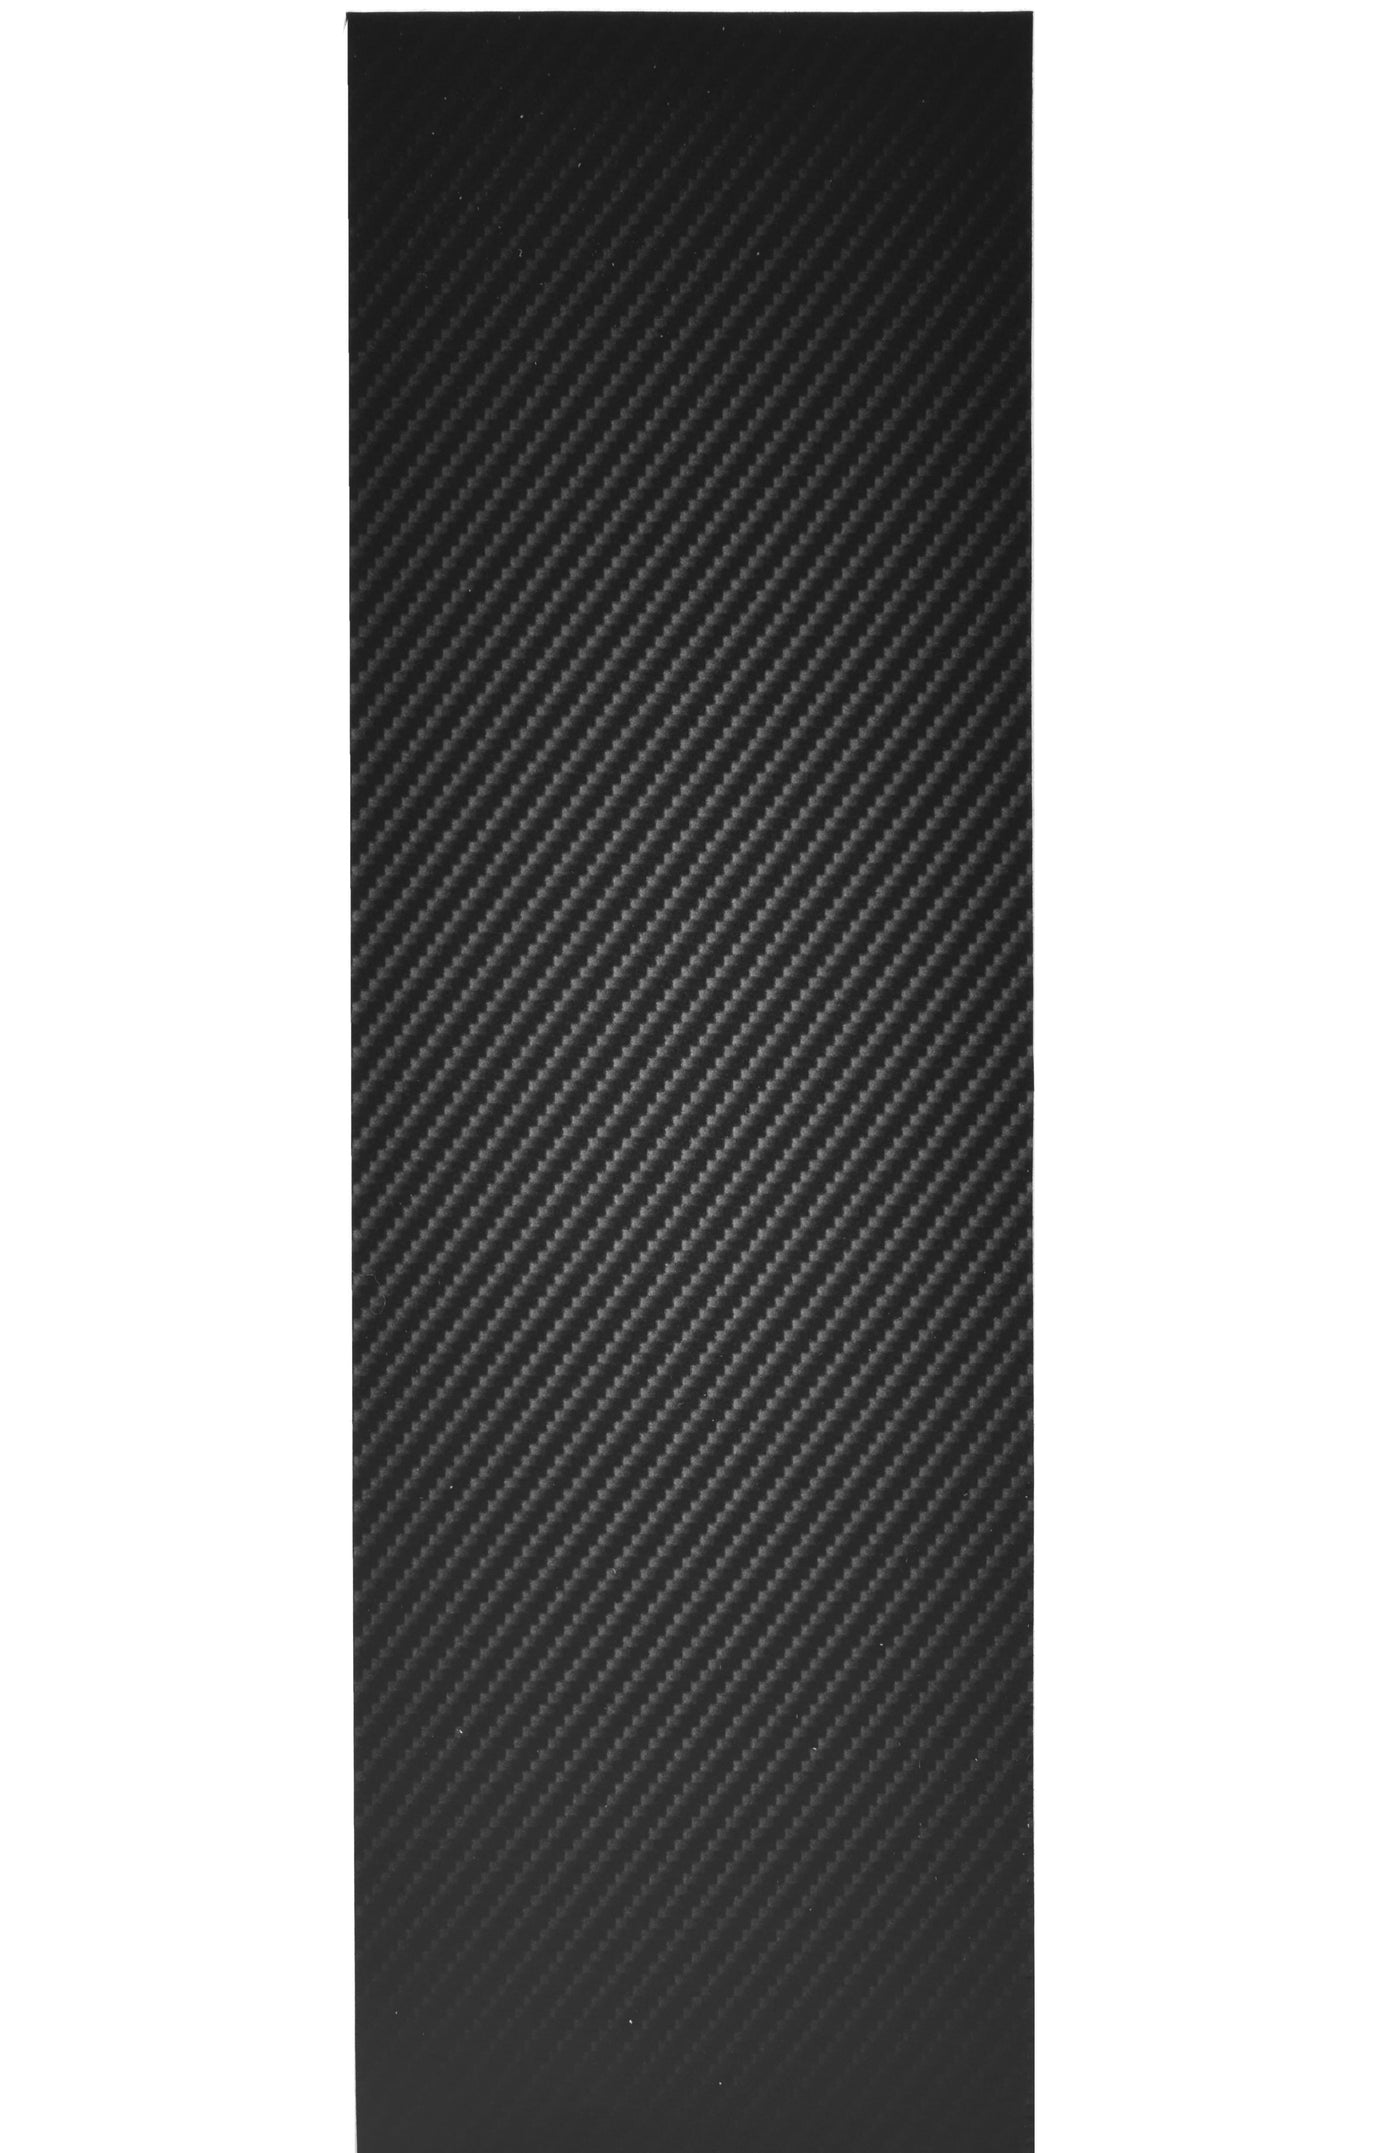 Teak Tuning "Carbon Fiber" Deck Graphic Wrap - 35mm x 110mm